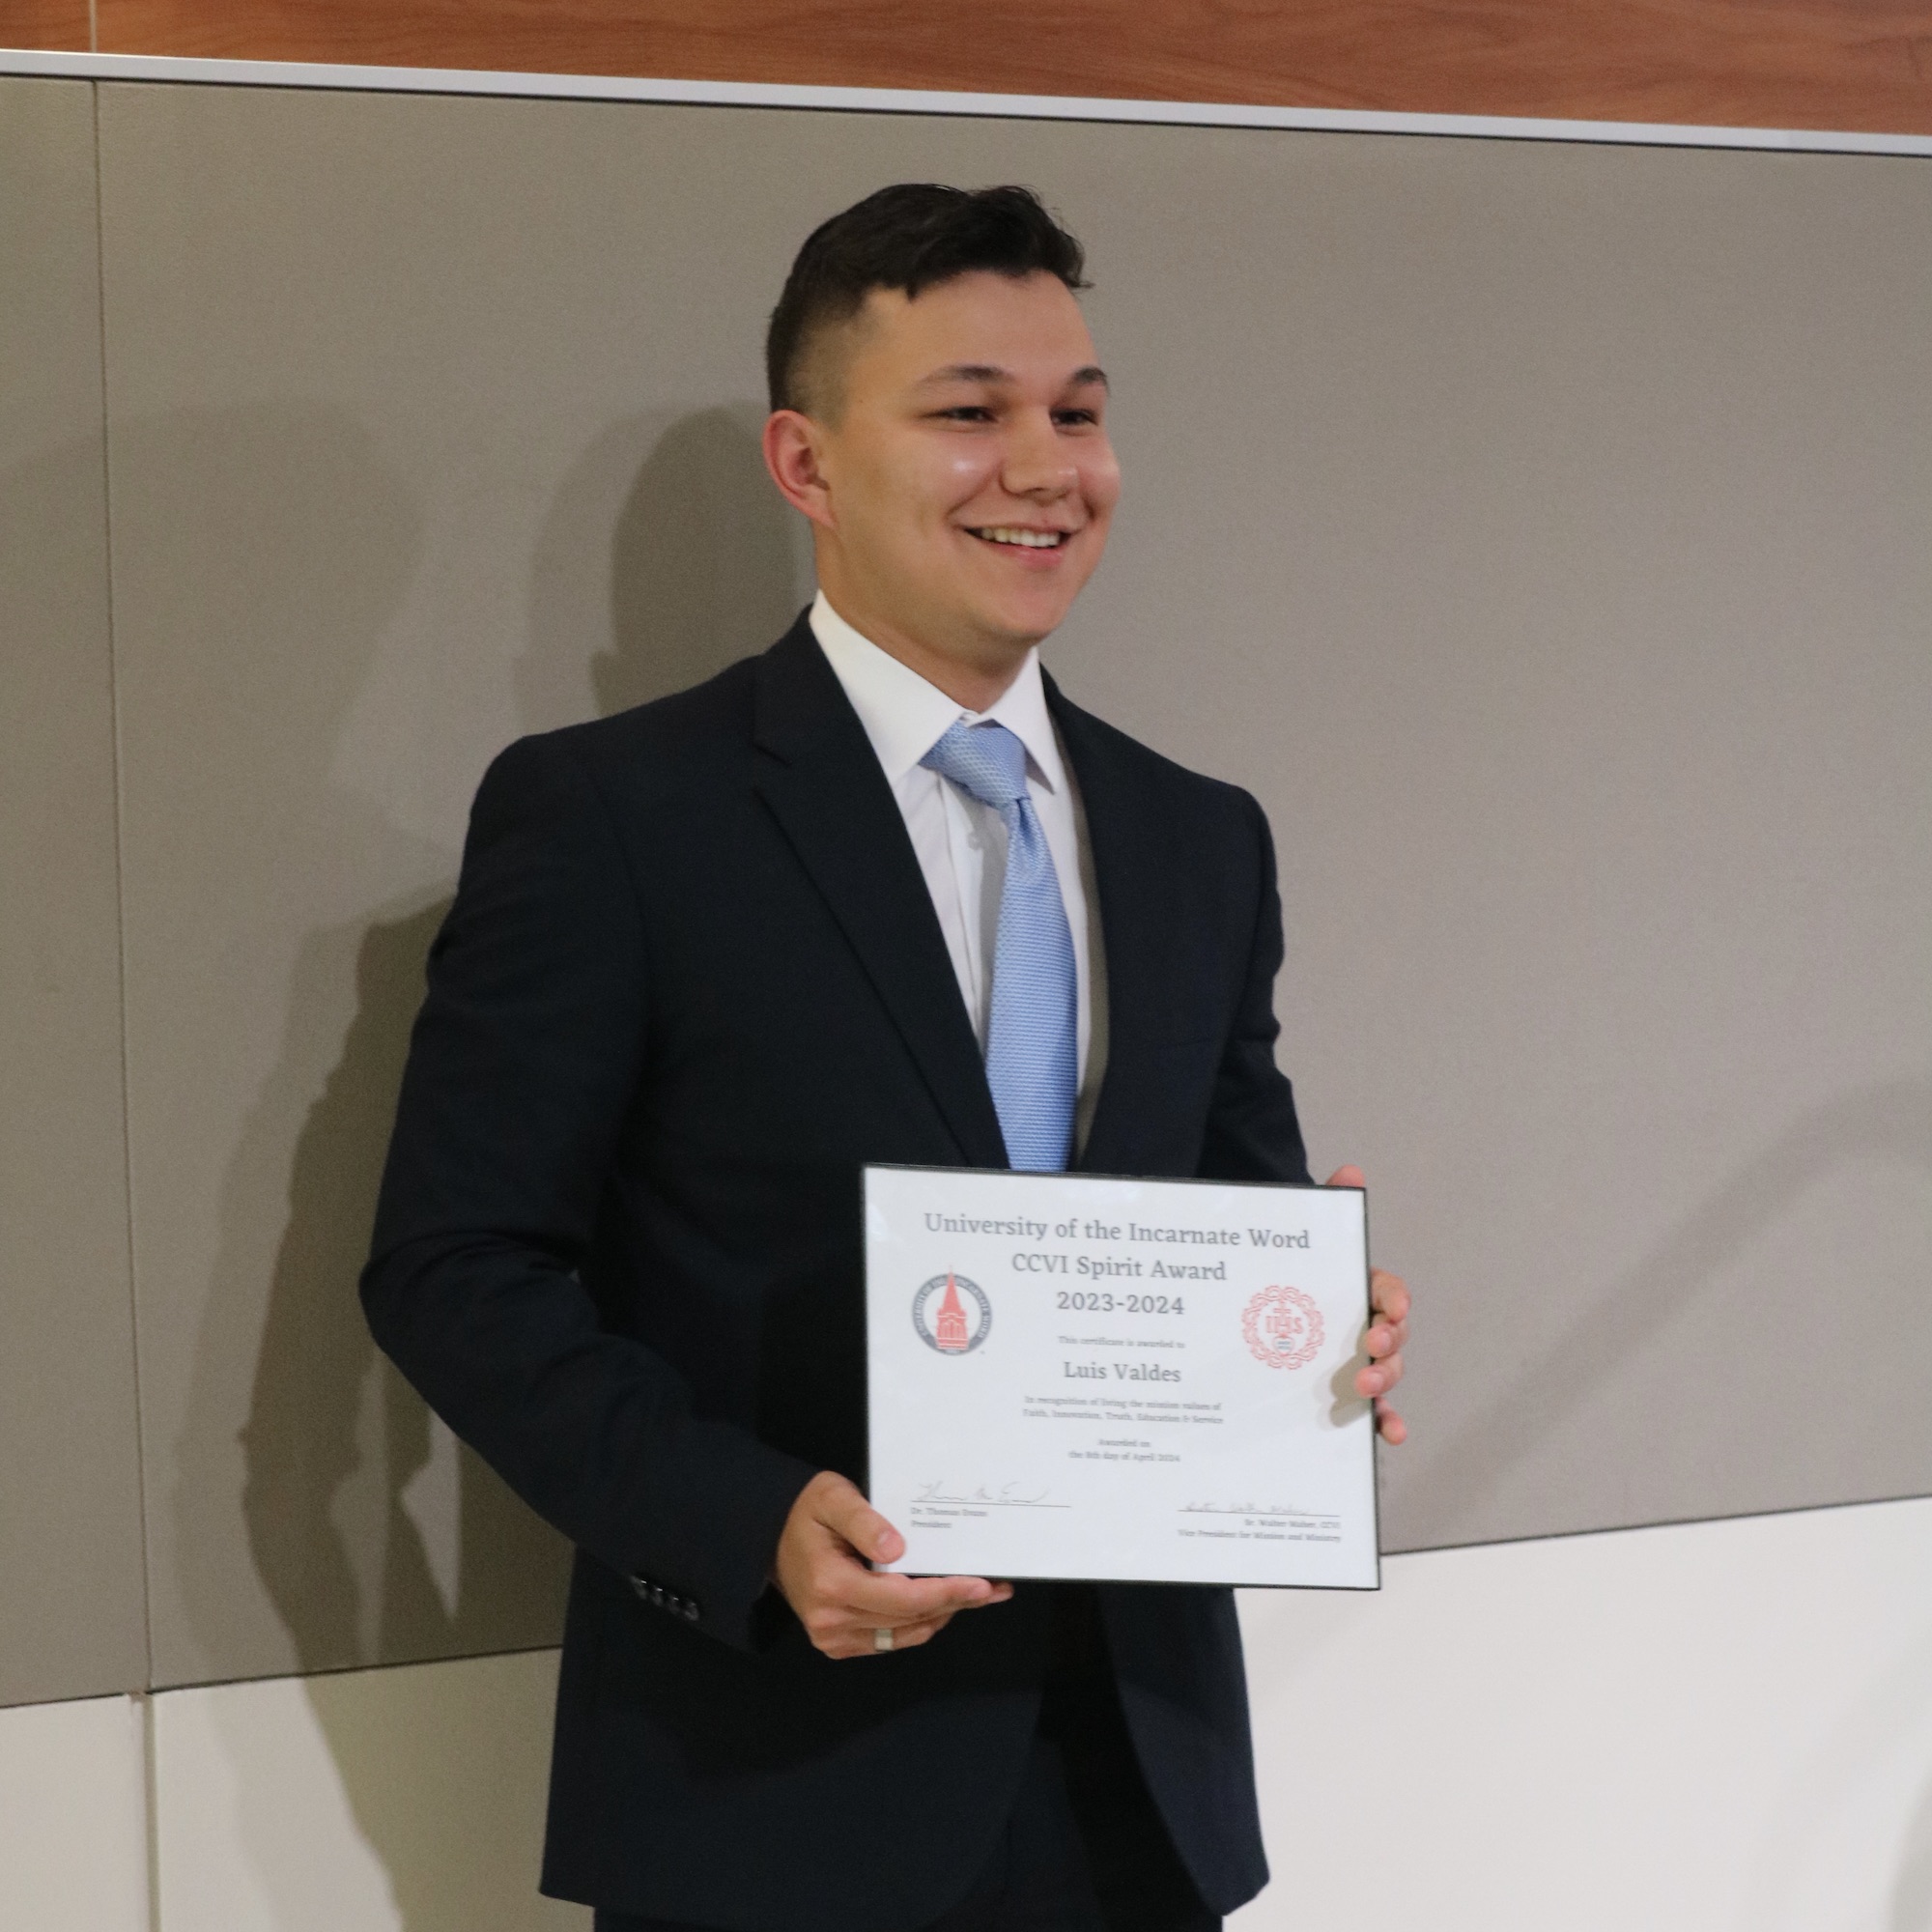 Luis Valdes - Student CCVI Spirit Award Recipient for 2023-2024